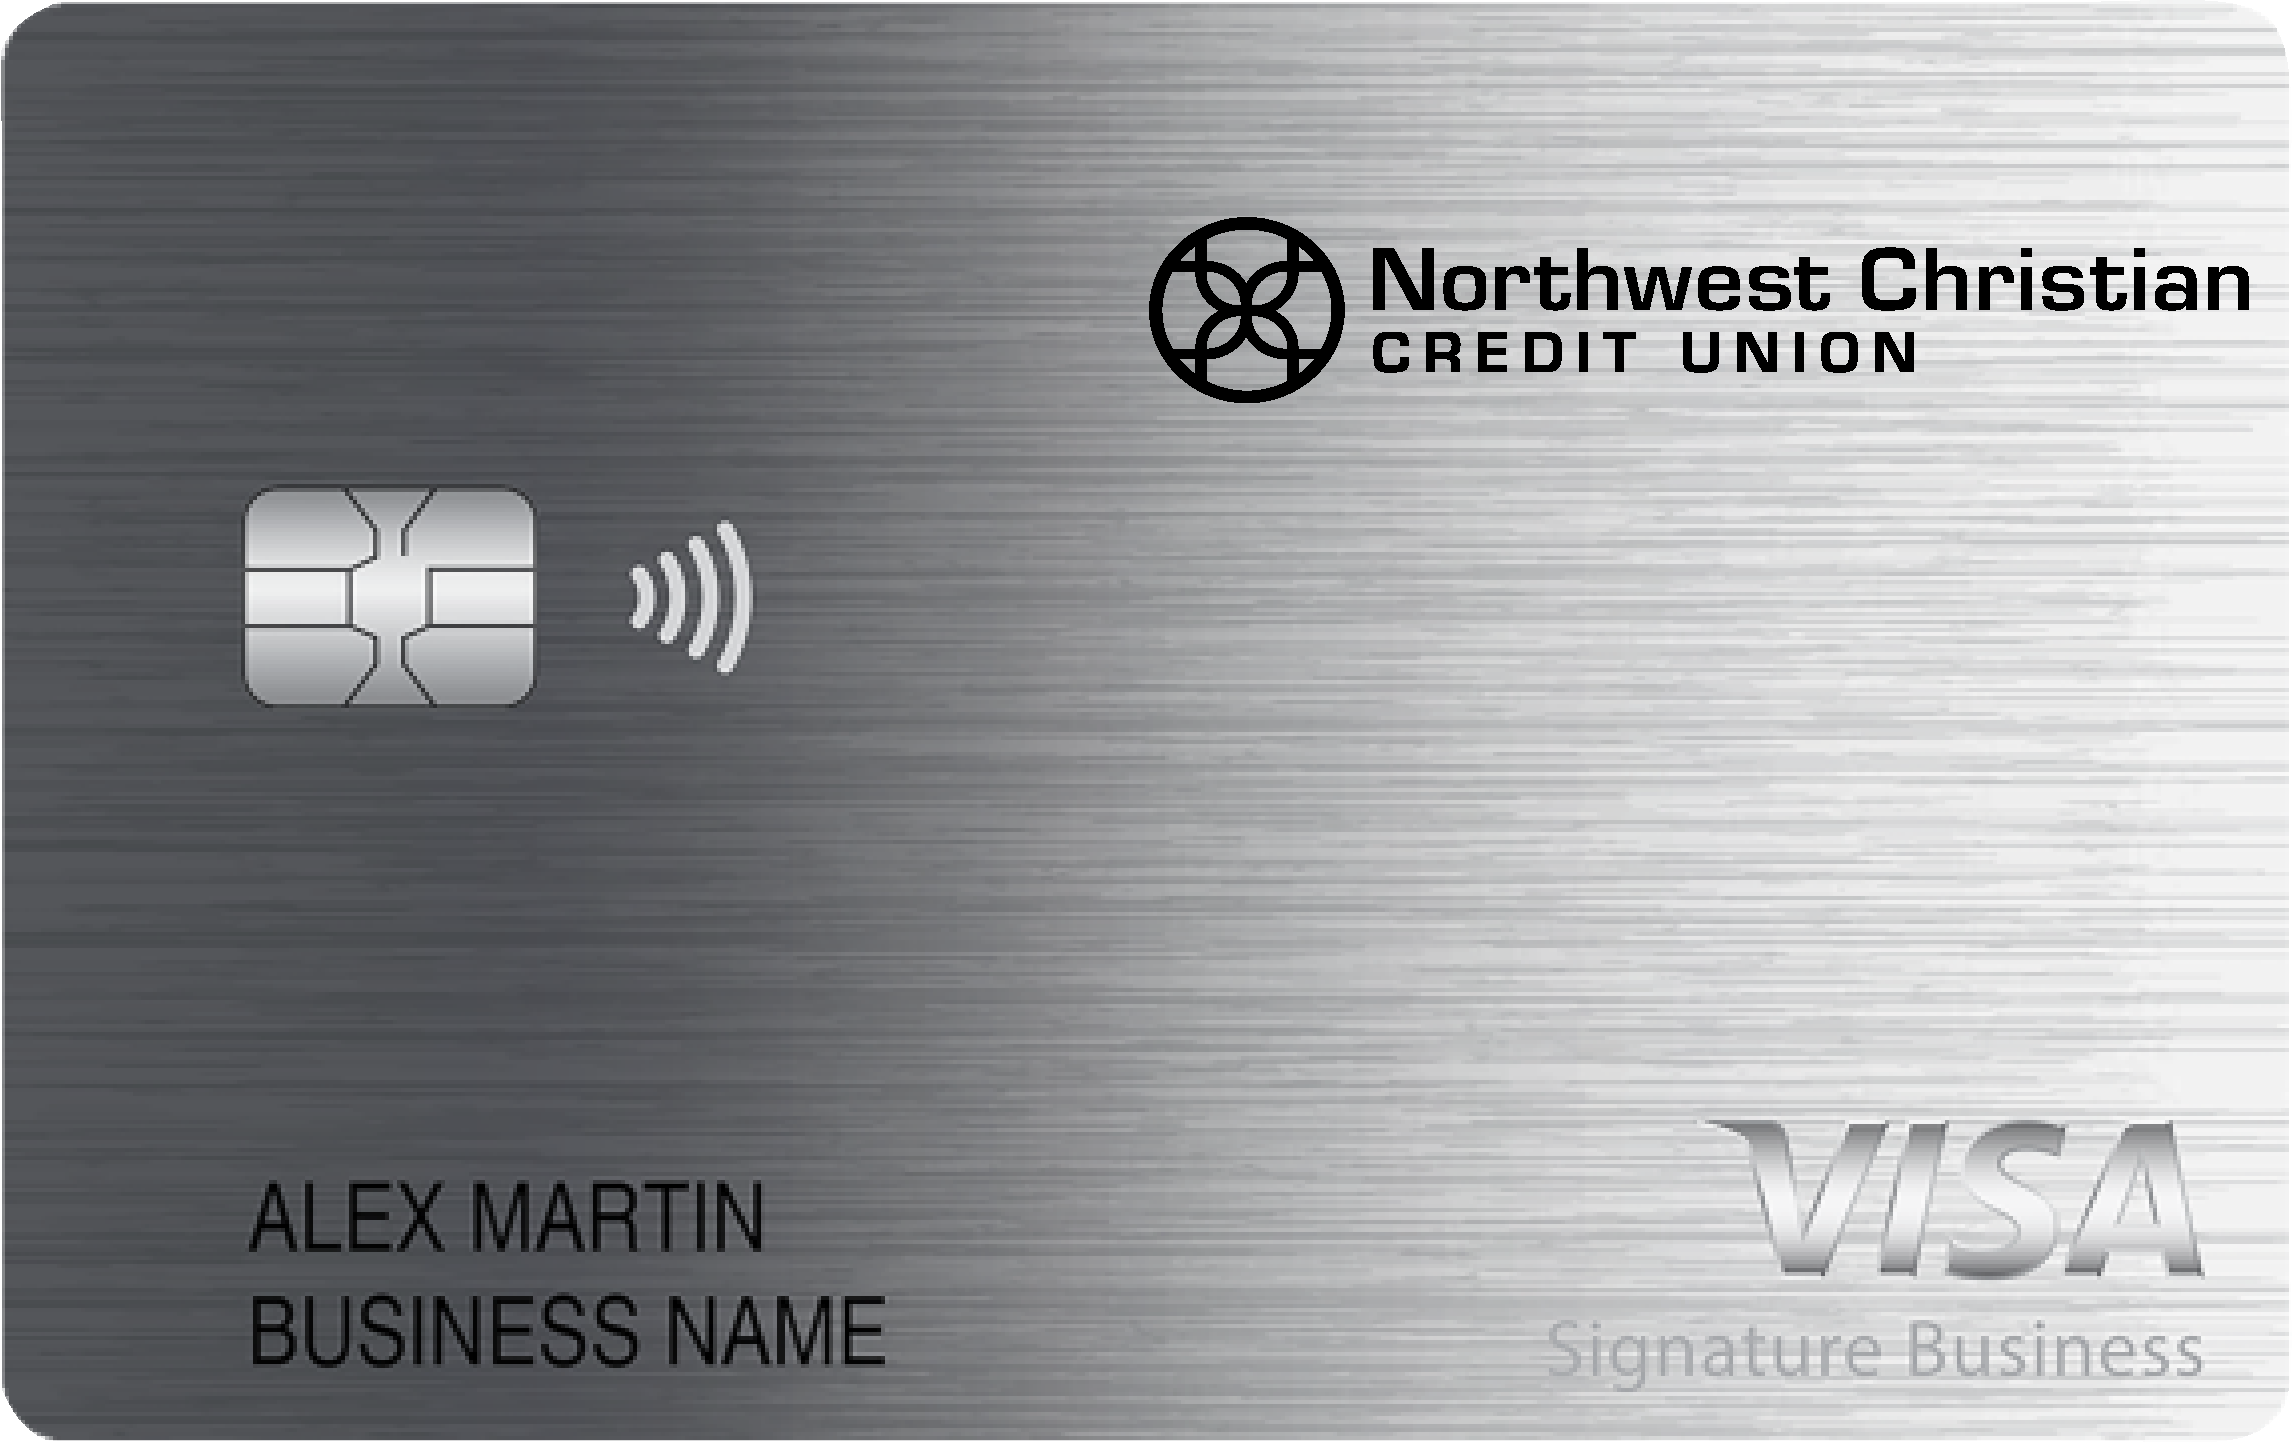 Northwest Christian Credit Union Smart Business Rewards Card